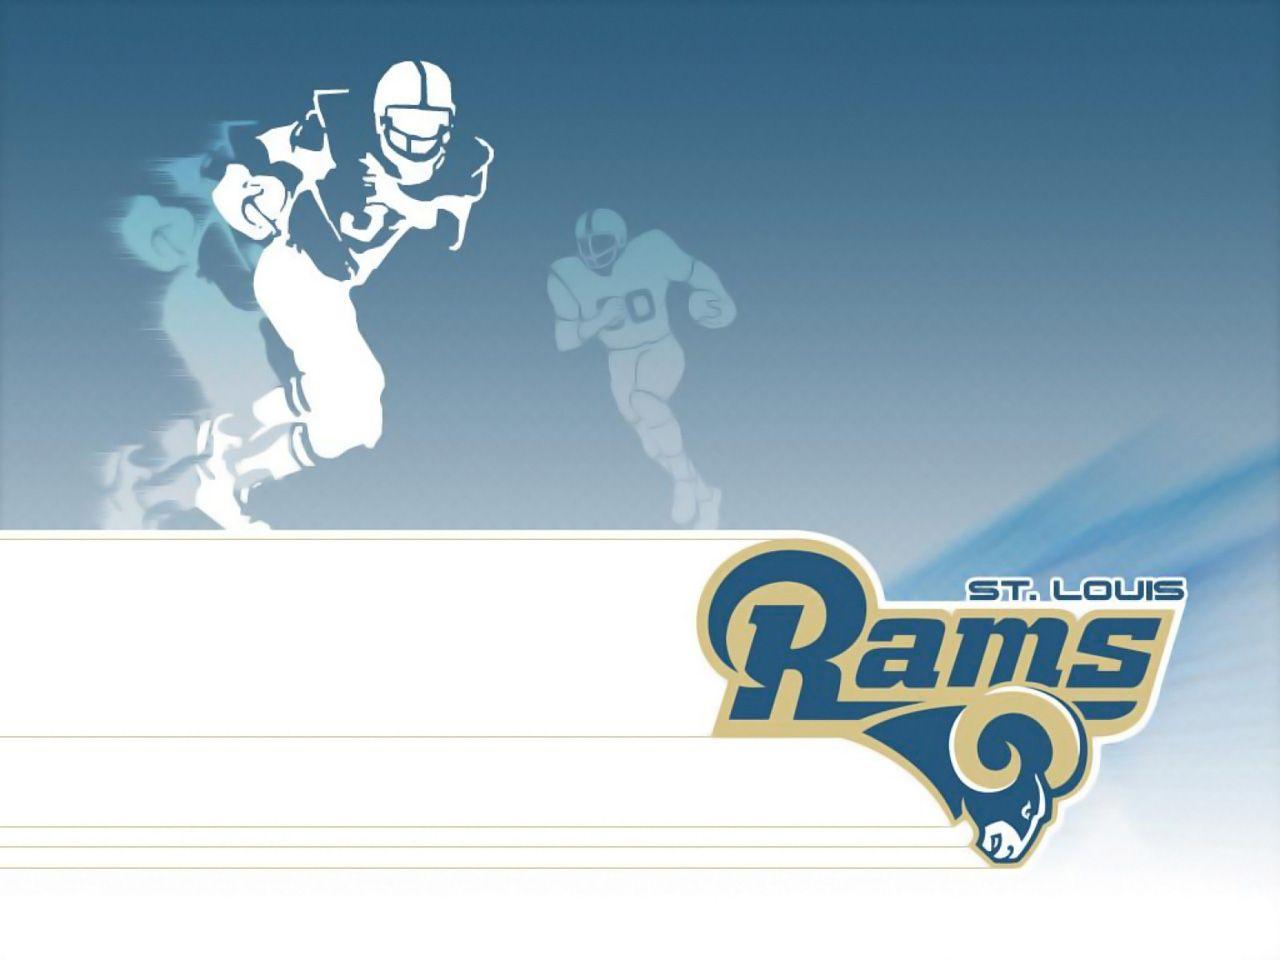 New St. Louis Rams wallpaper background. St. Louis Rams wallpaper